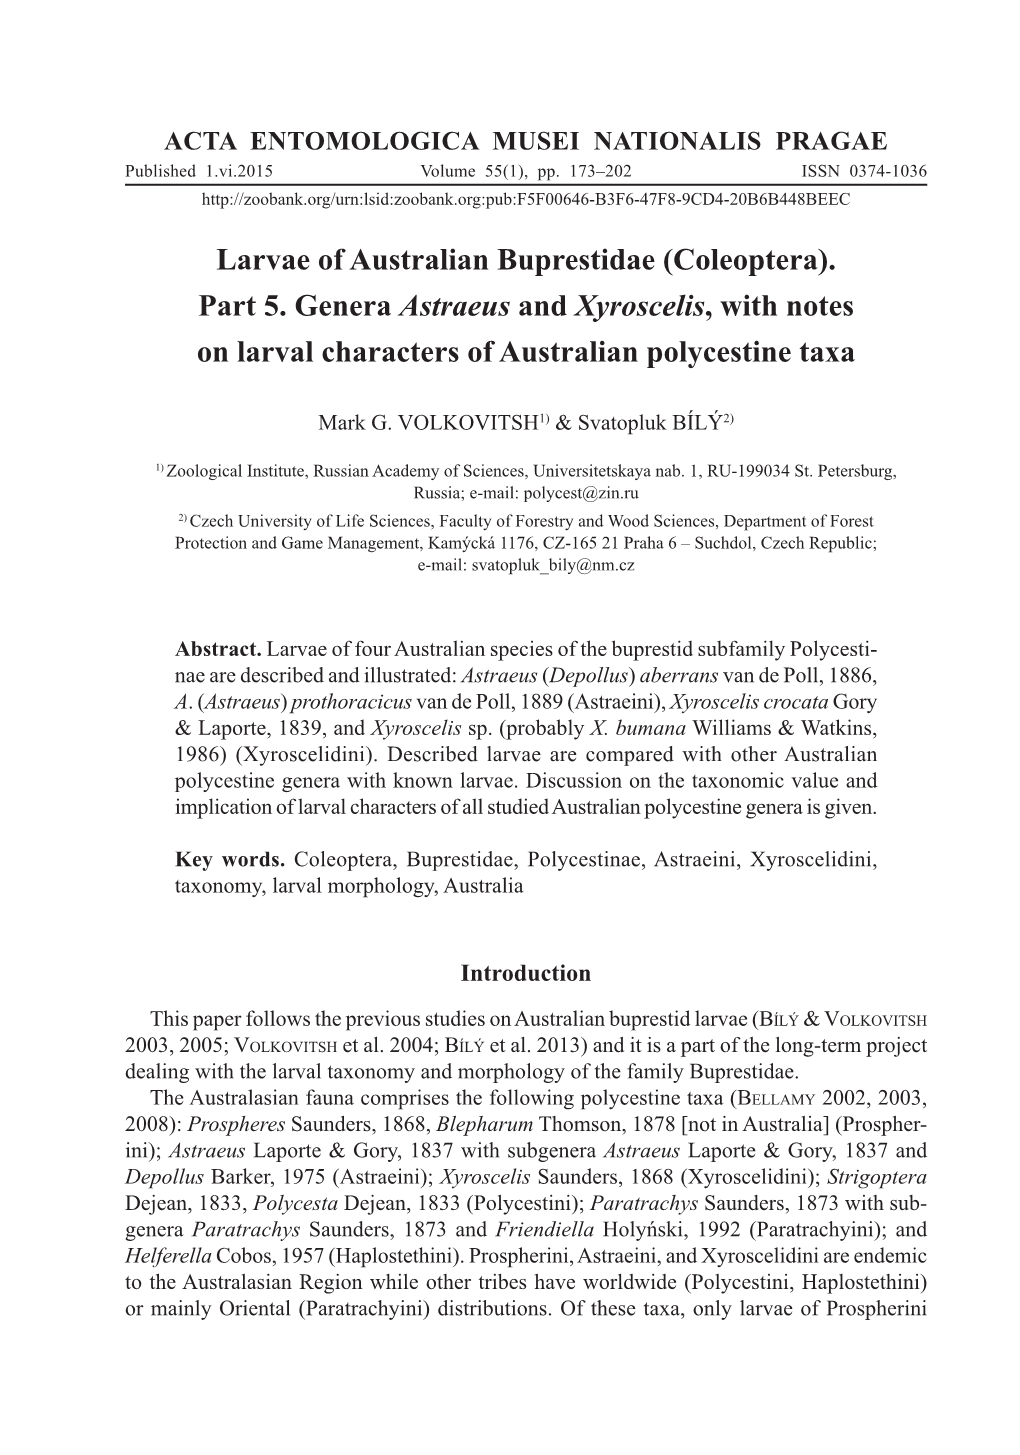 Larvae of Australian Buprestidae (Coleoptera). Part 5. Genera Astraeus and Xyroscelis, with Notes on Larval Characters of Australian Polycestine Taxa